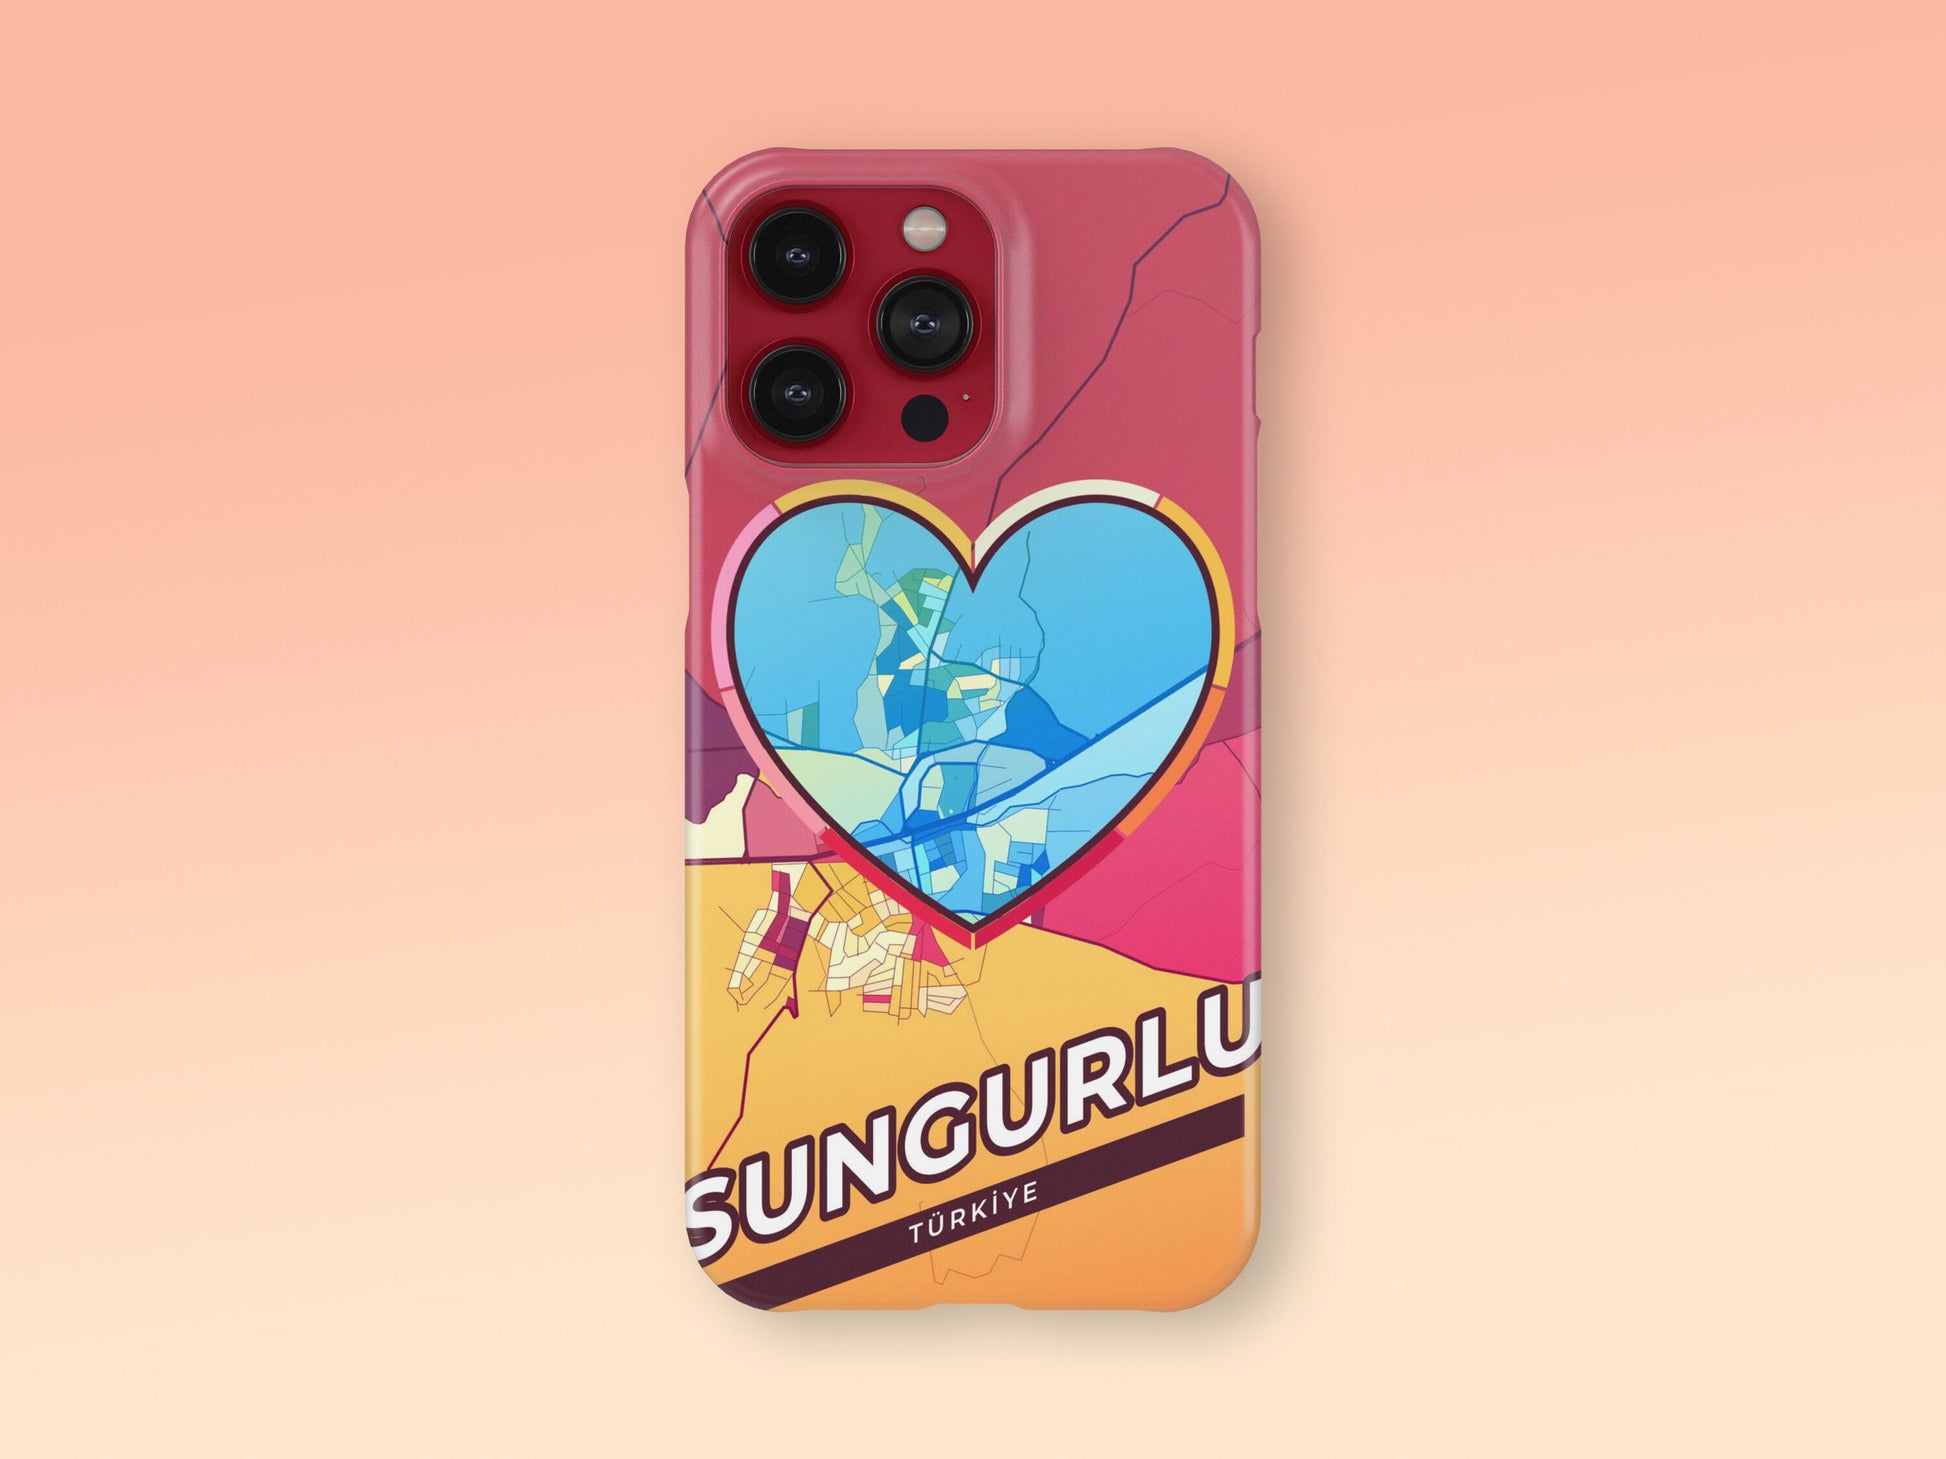 Sungurlu Turkey slim phone case with colorful icon 2